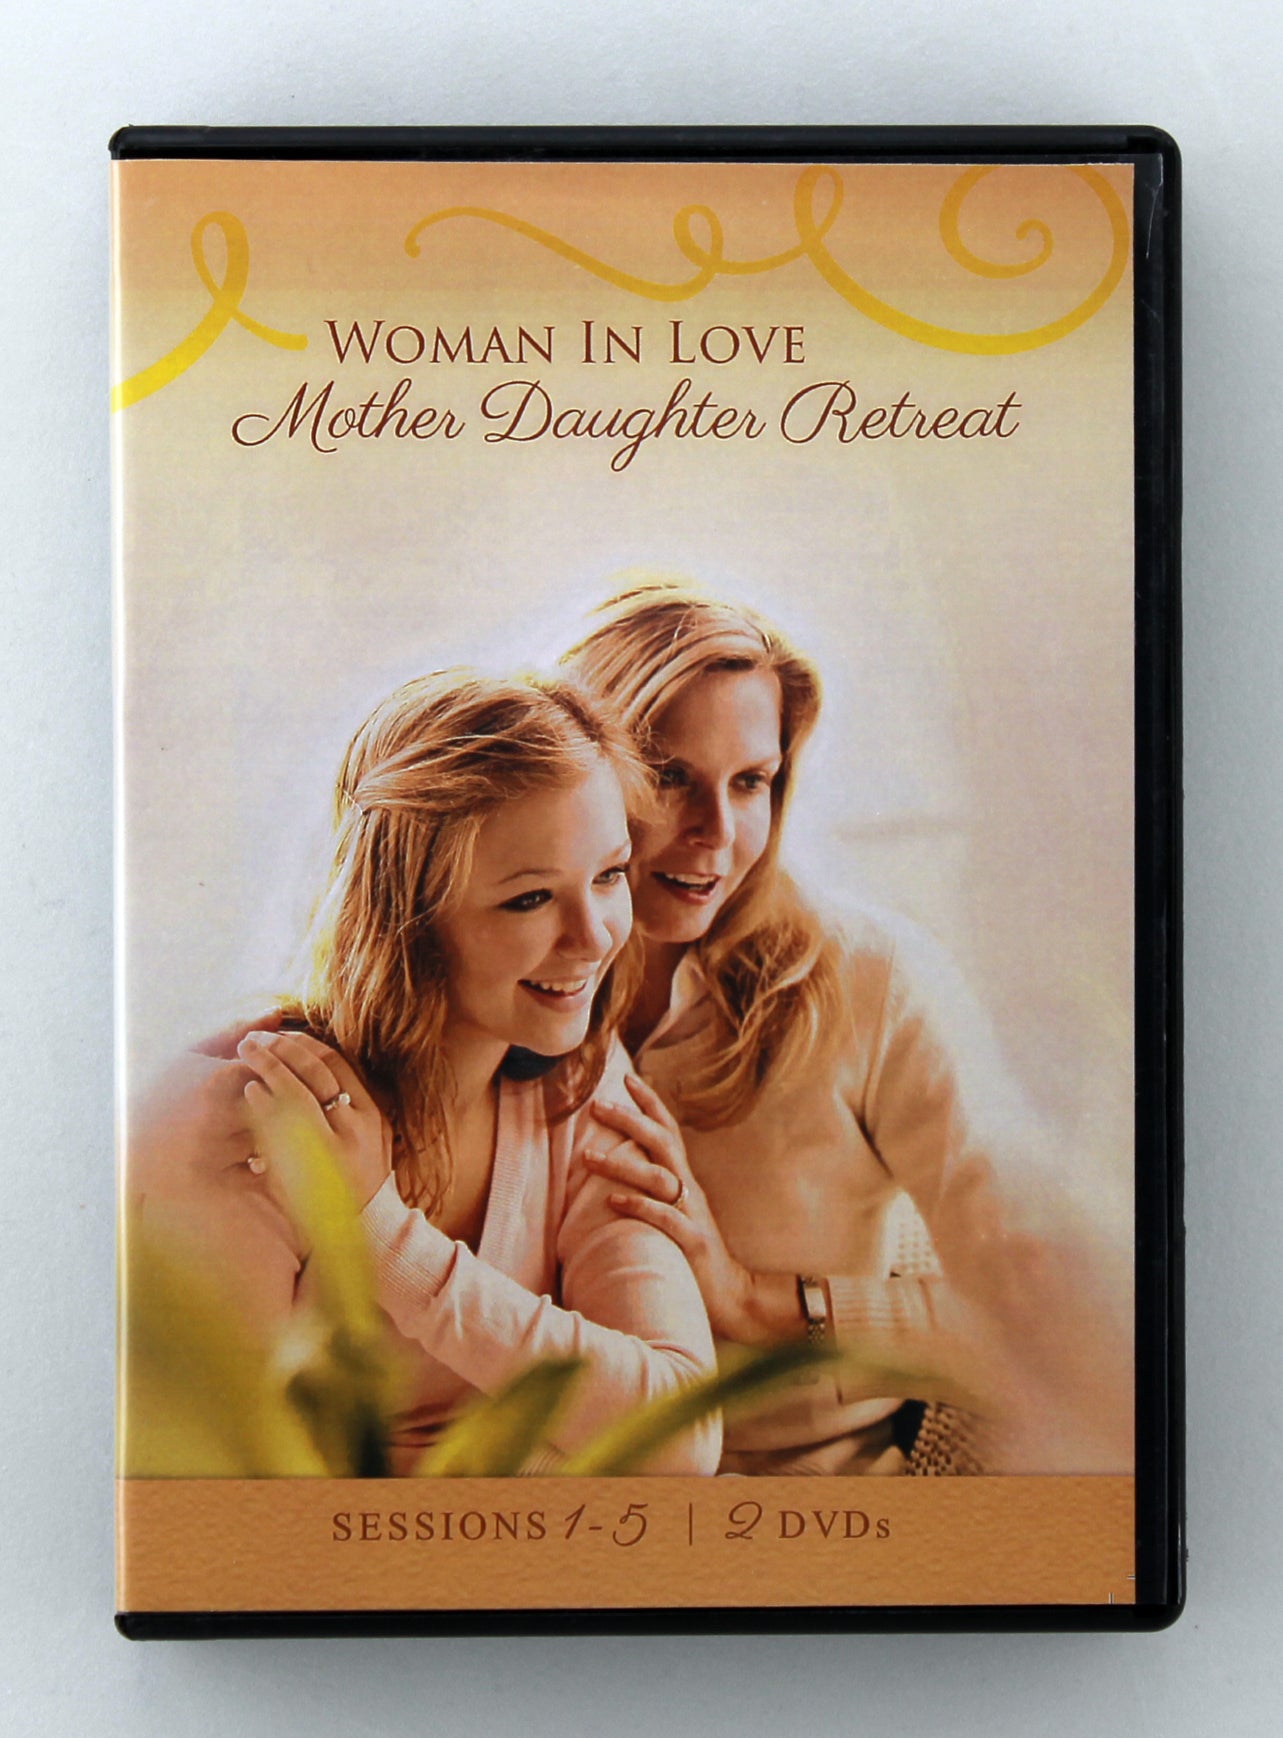 Mother Daughter Retreat DVDs